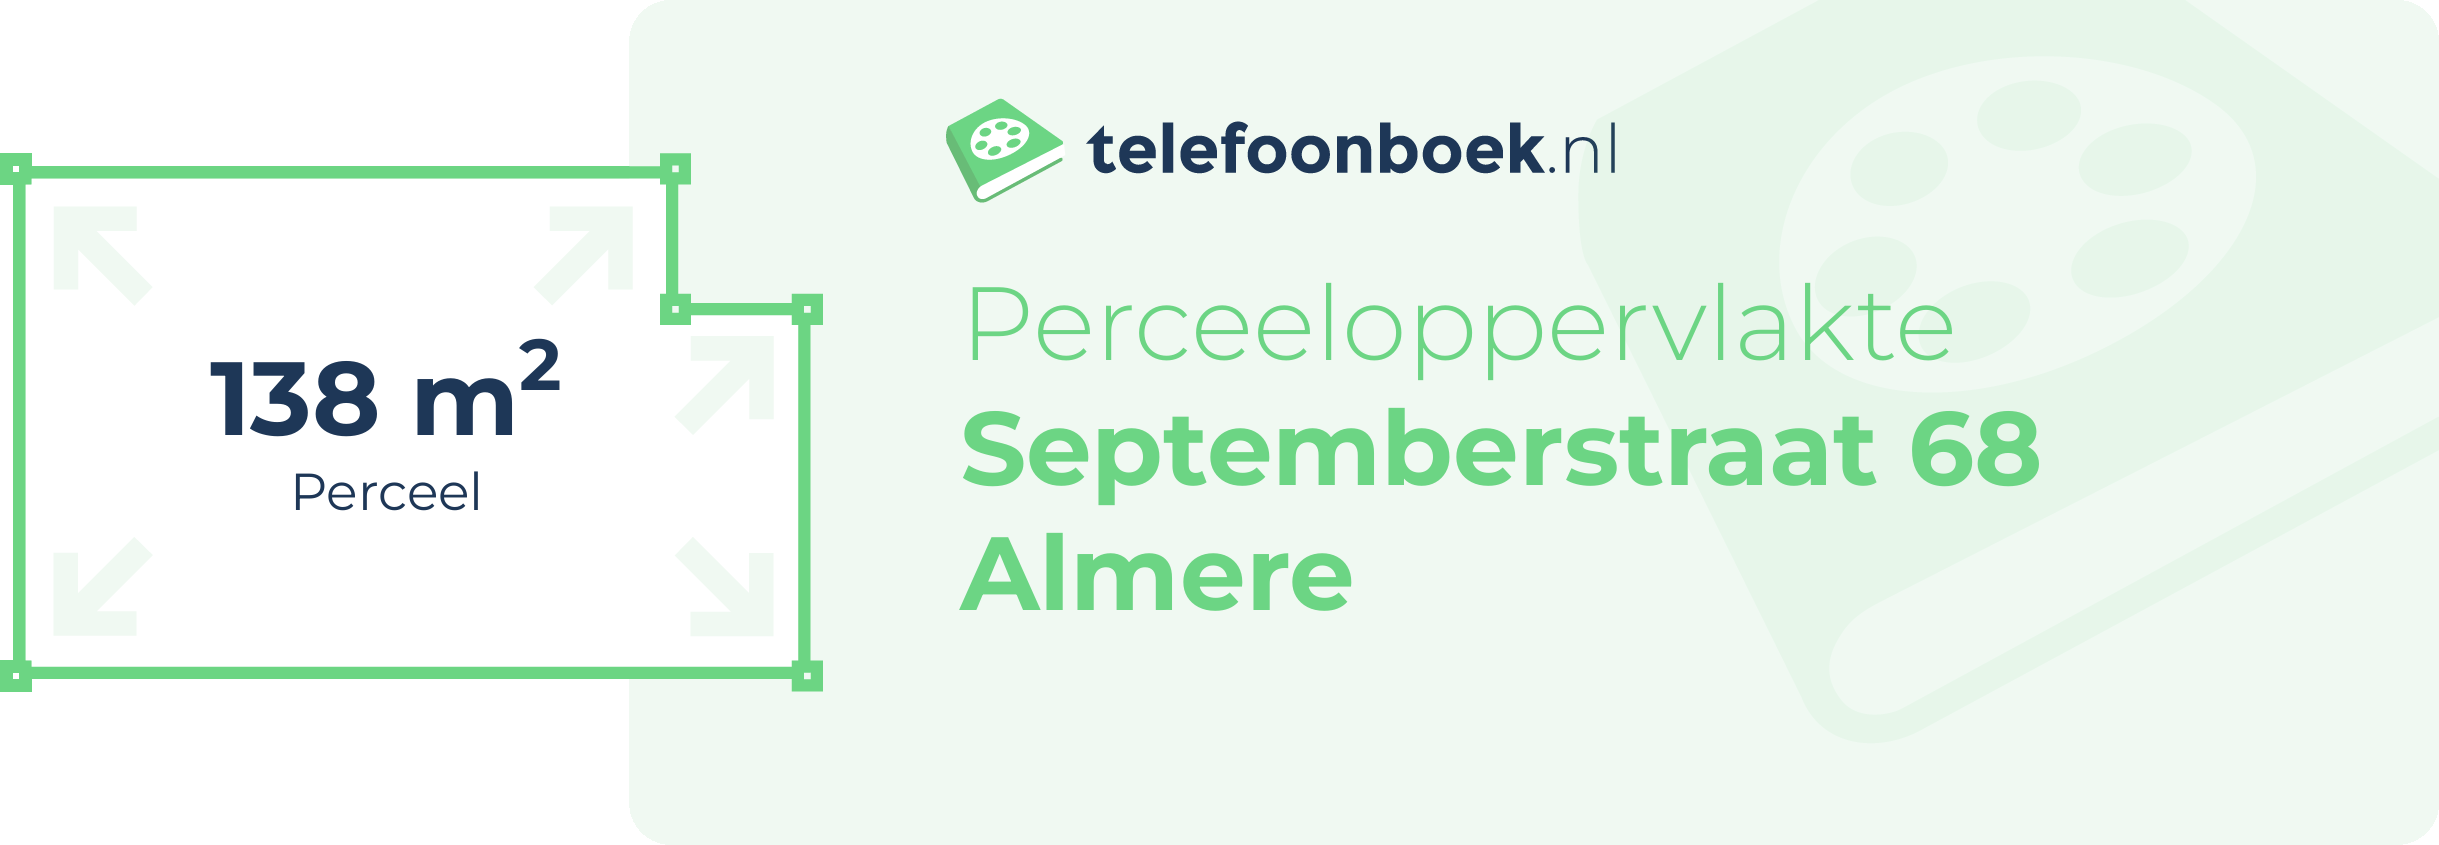 Perceeloppervlakte Septemberstraat 68 Almere